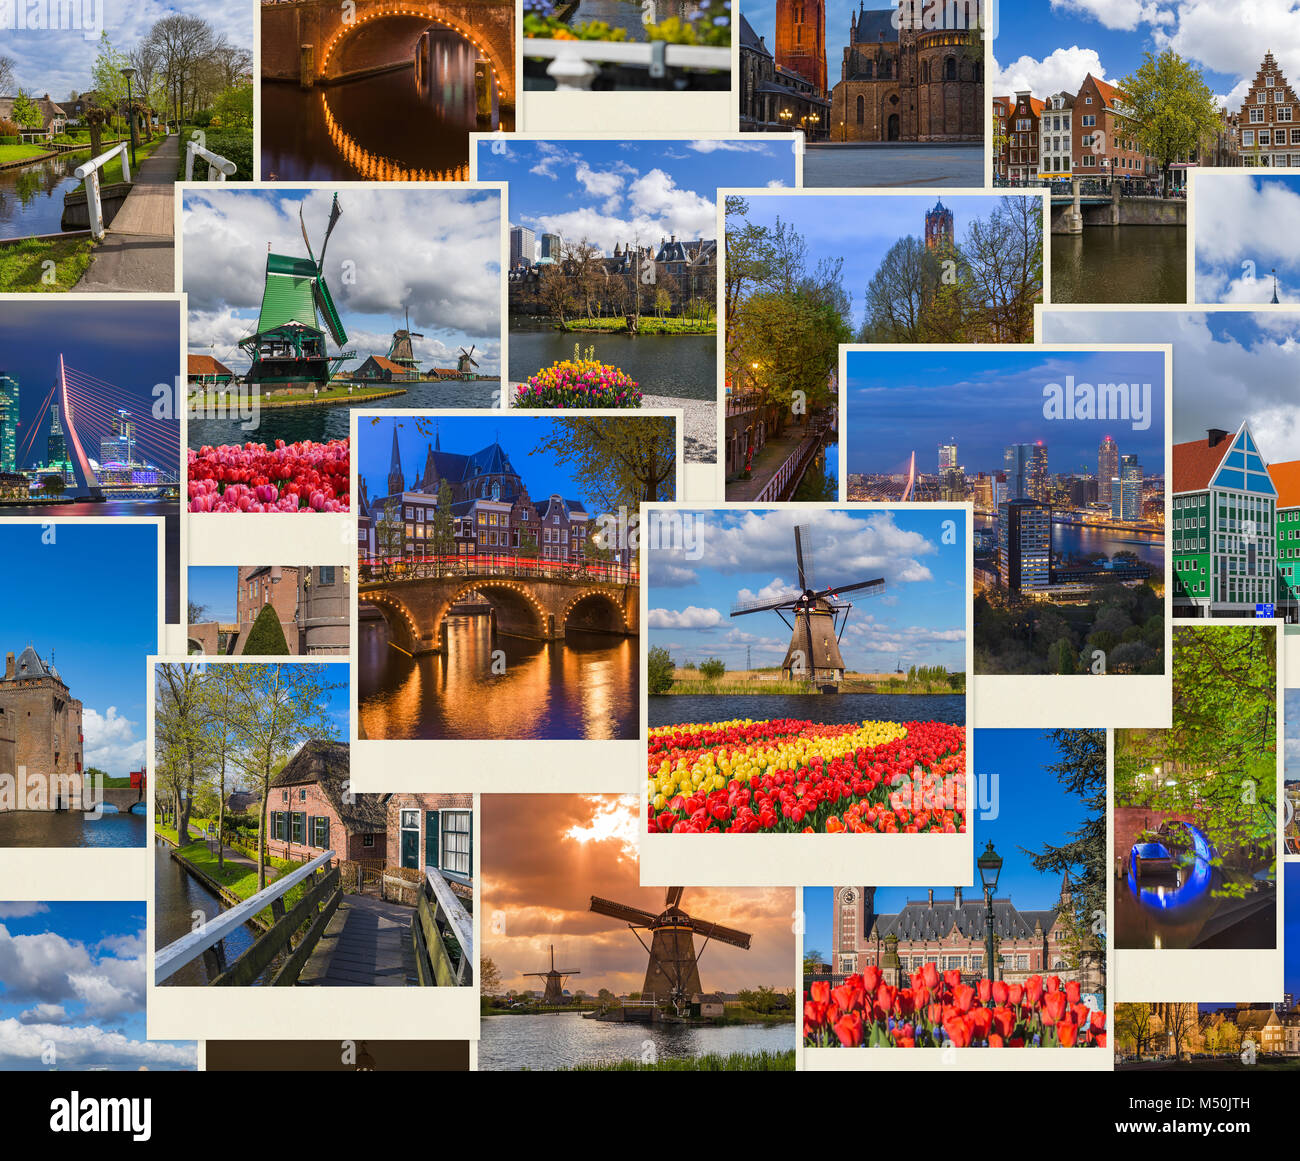 Netherlands travel images (my photos) Stock Photo